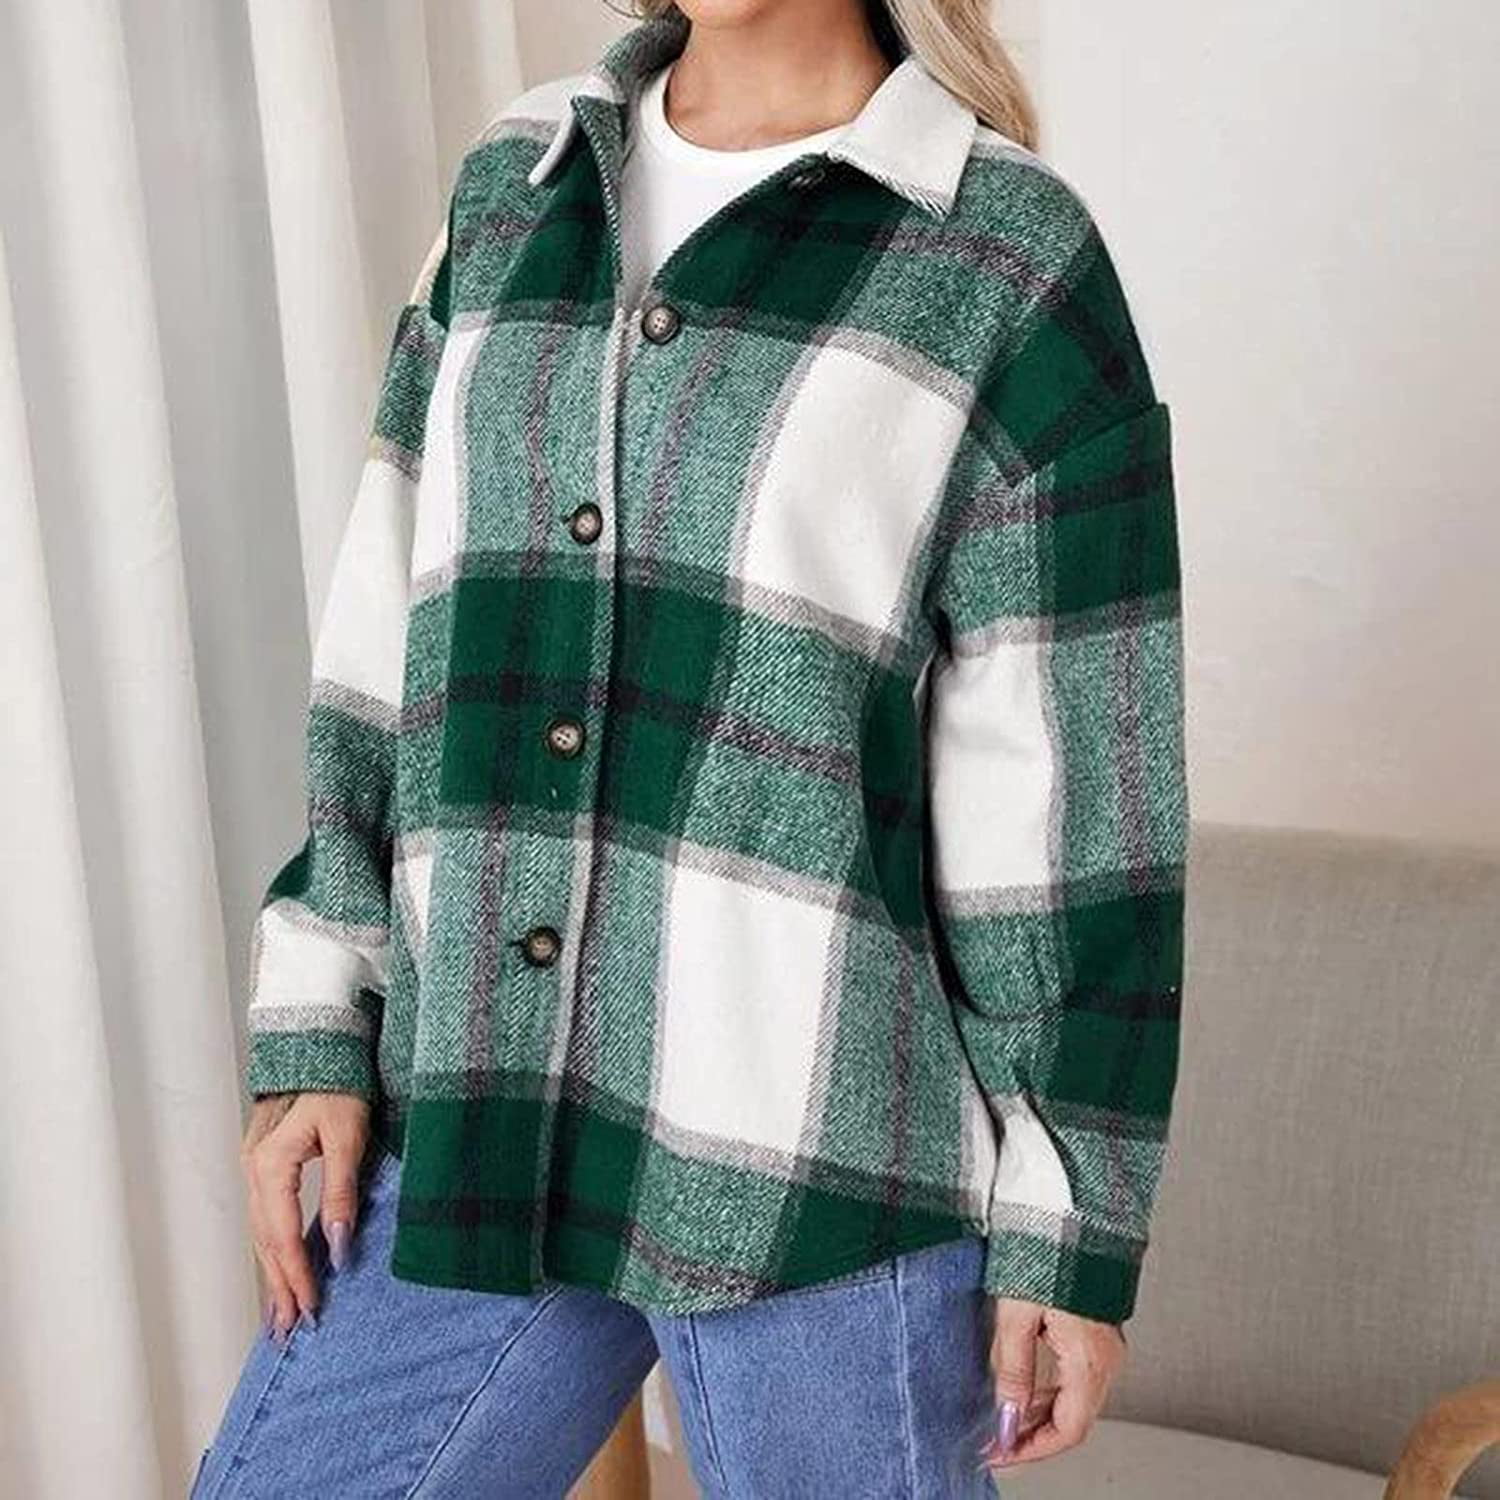 JGGSPWM Womens Tie Dye Plaid Color Block Distressed Shacket Jacket Winter  Coat Tops Comfortable Pullover Long Sleeve Lapel V Neck Outwear Green M 